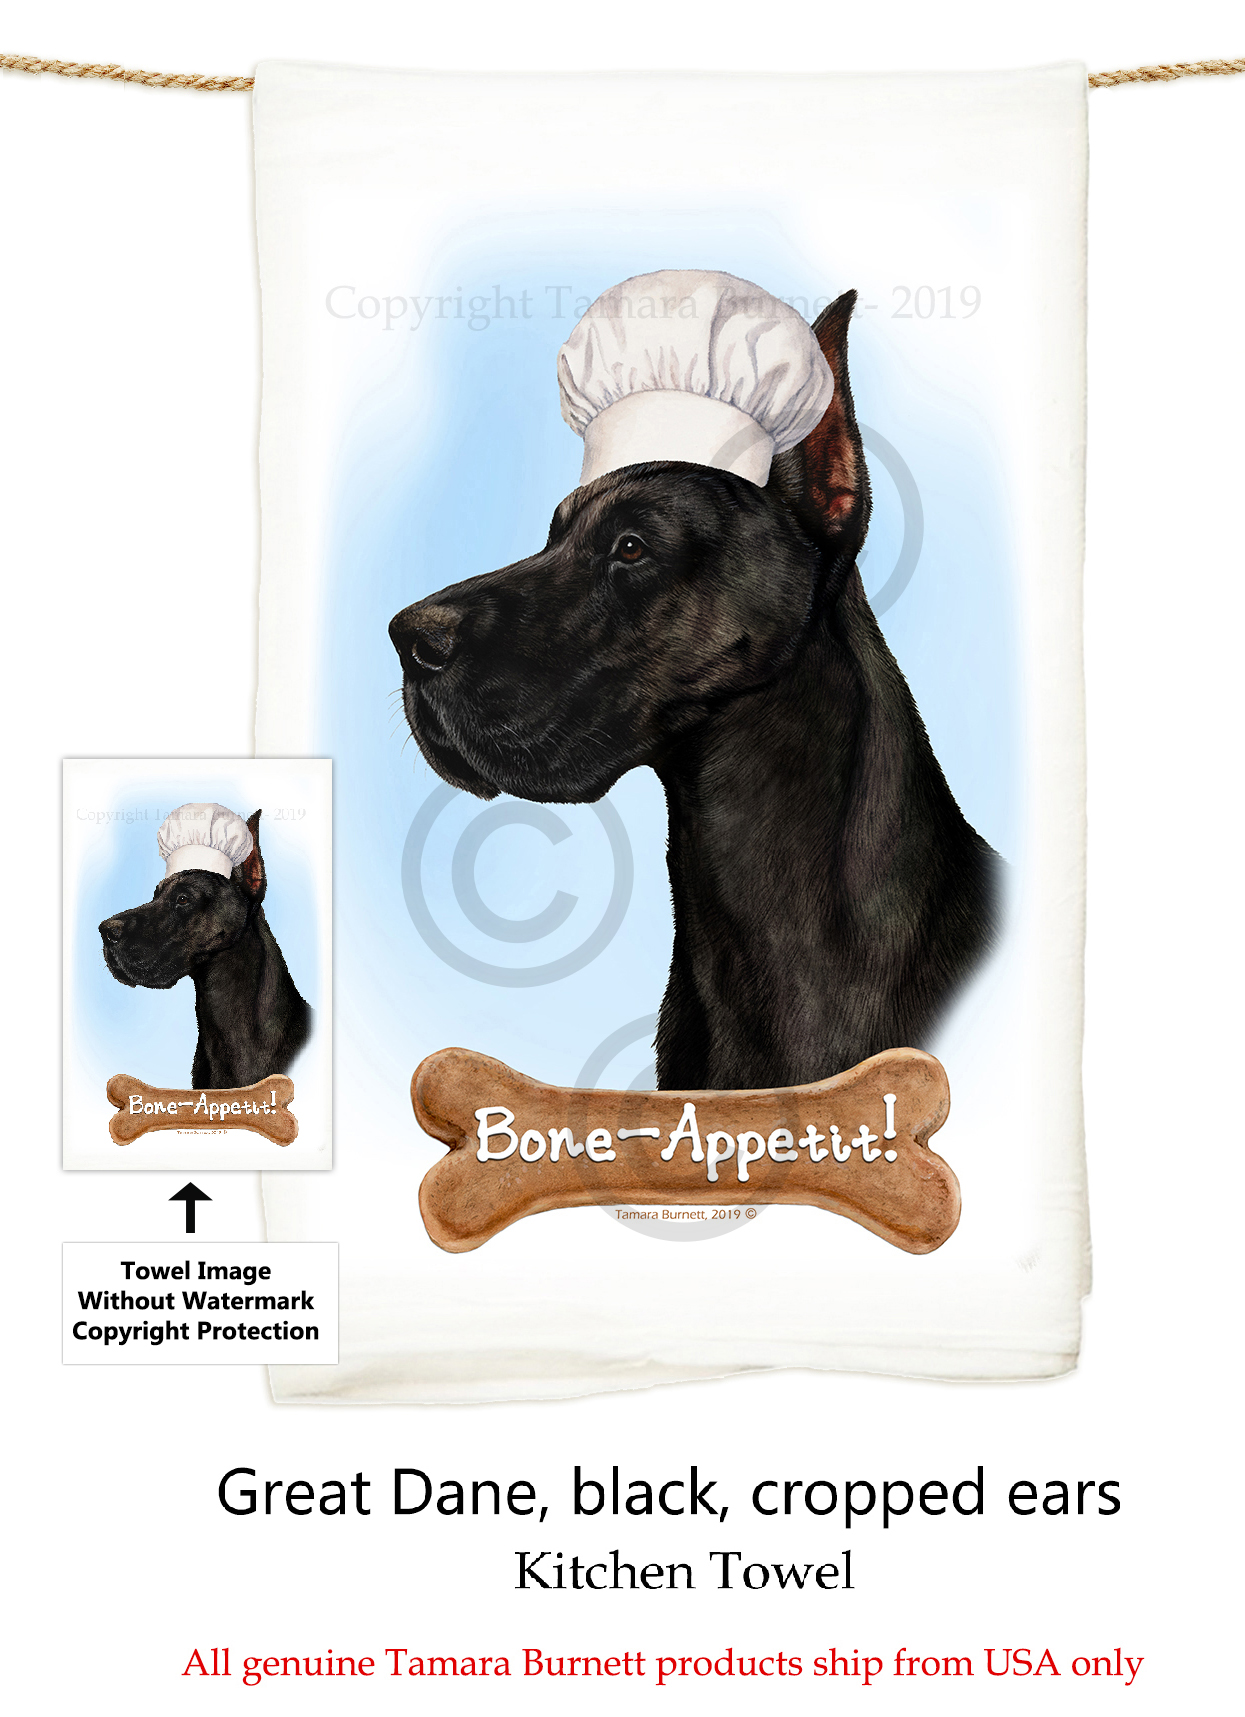 Great Dane Black Cropped - Flour Sack Towel image sized 1245 x 1717